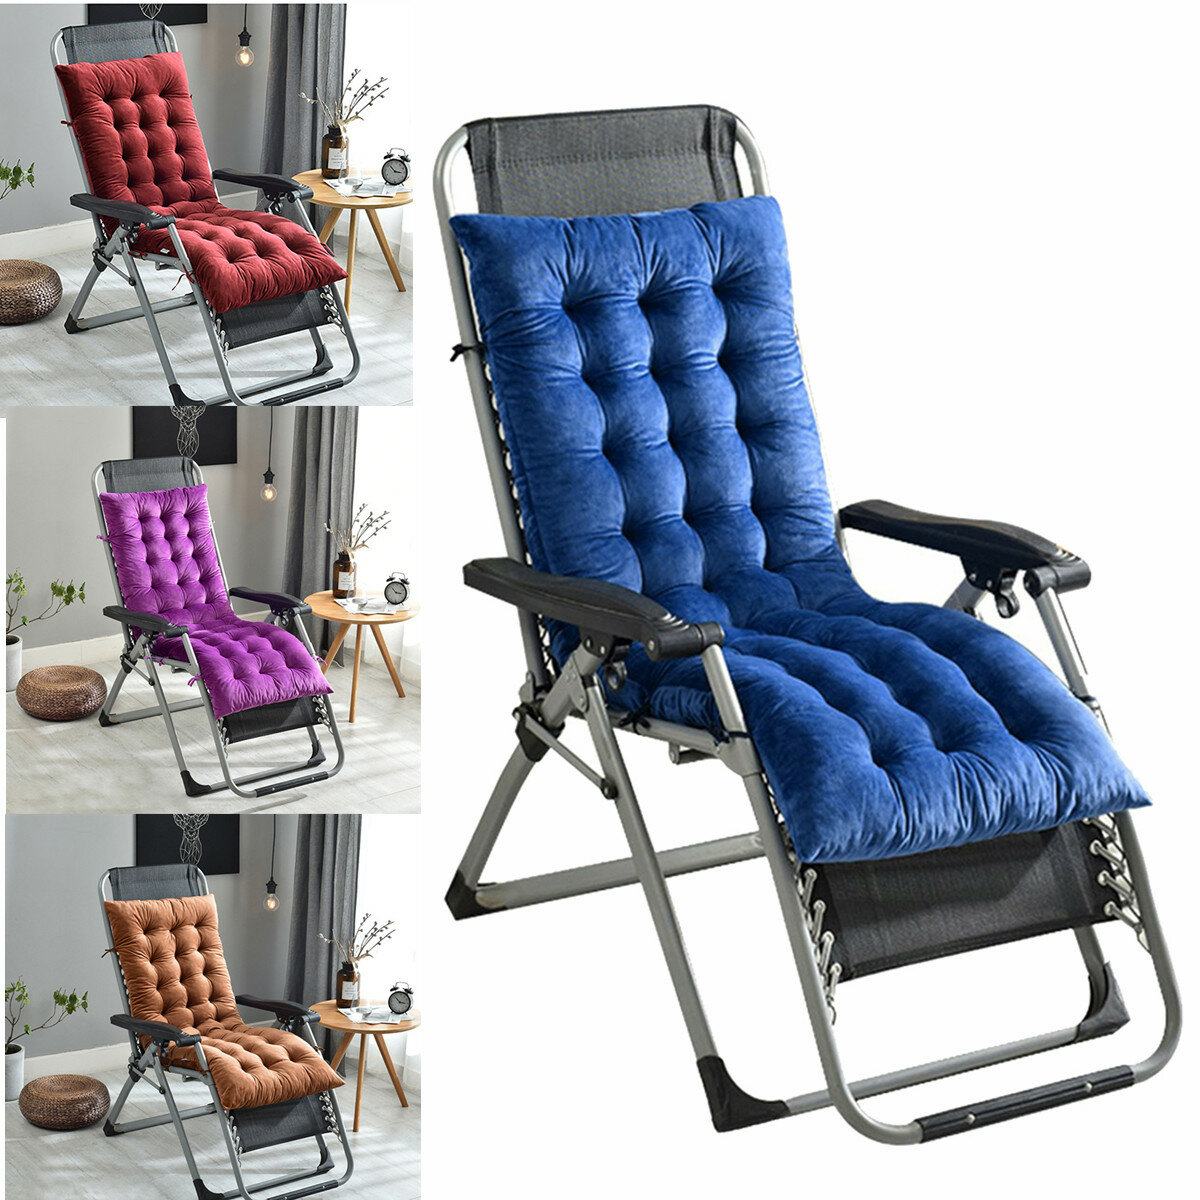 Sofa Seat Cushion Garden Sun Lounger Recliner Chair Replacement Pad 160*50*10CM